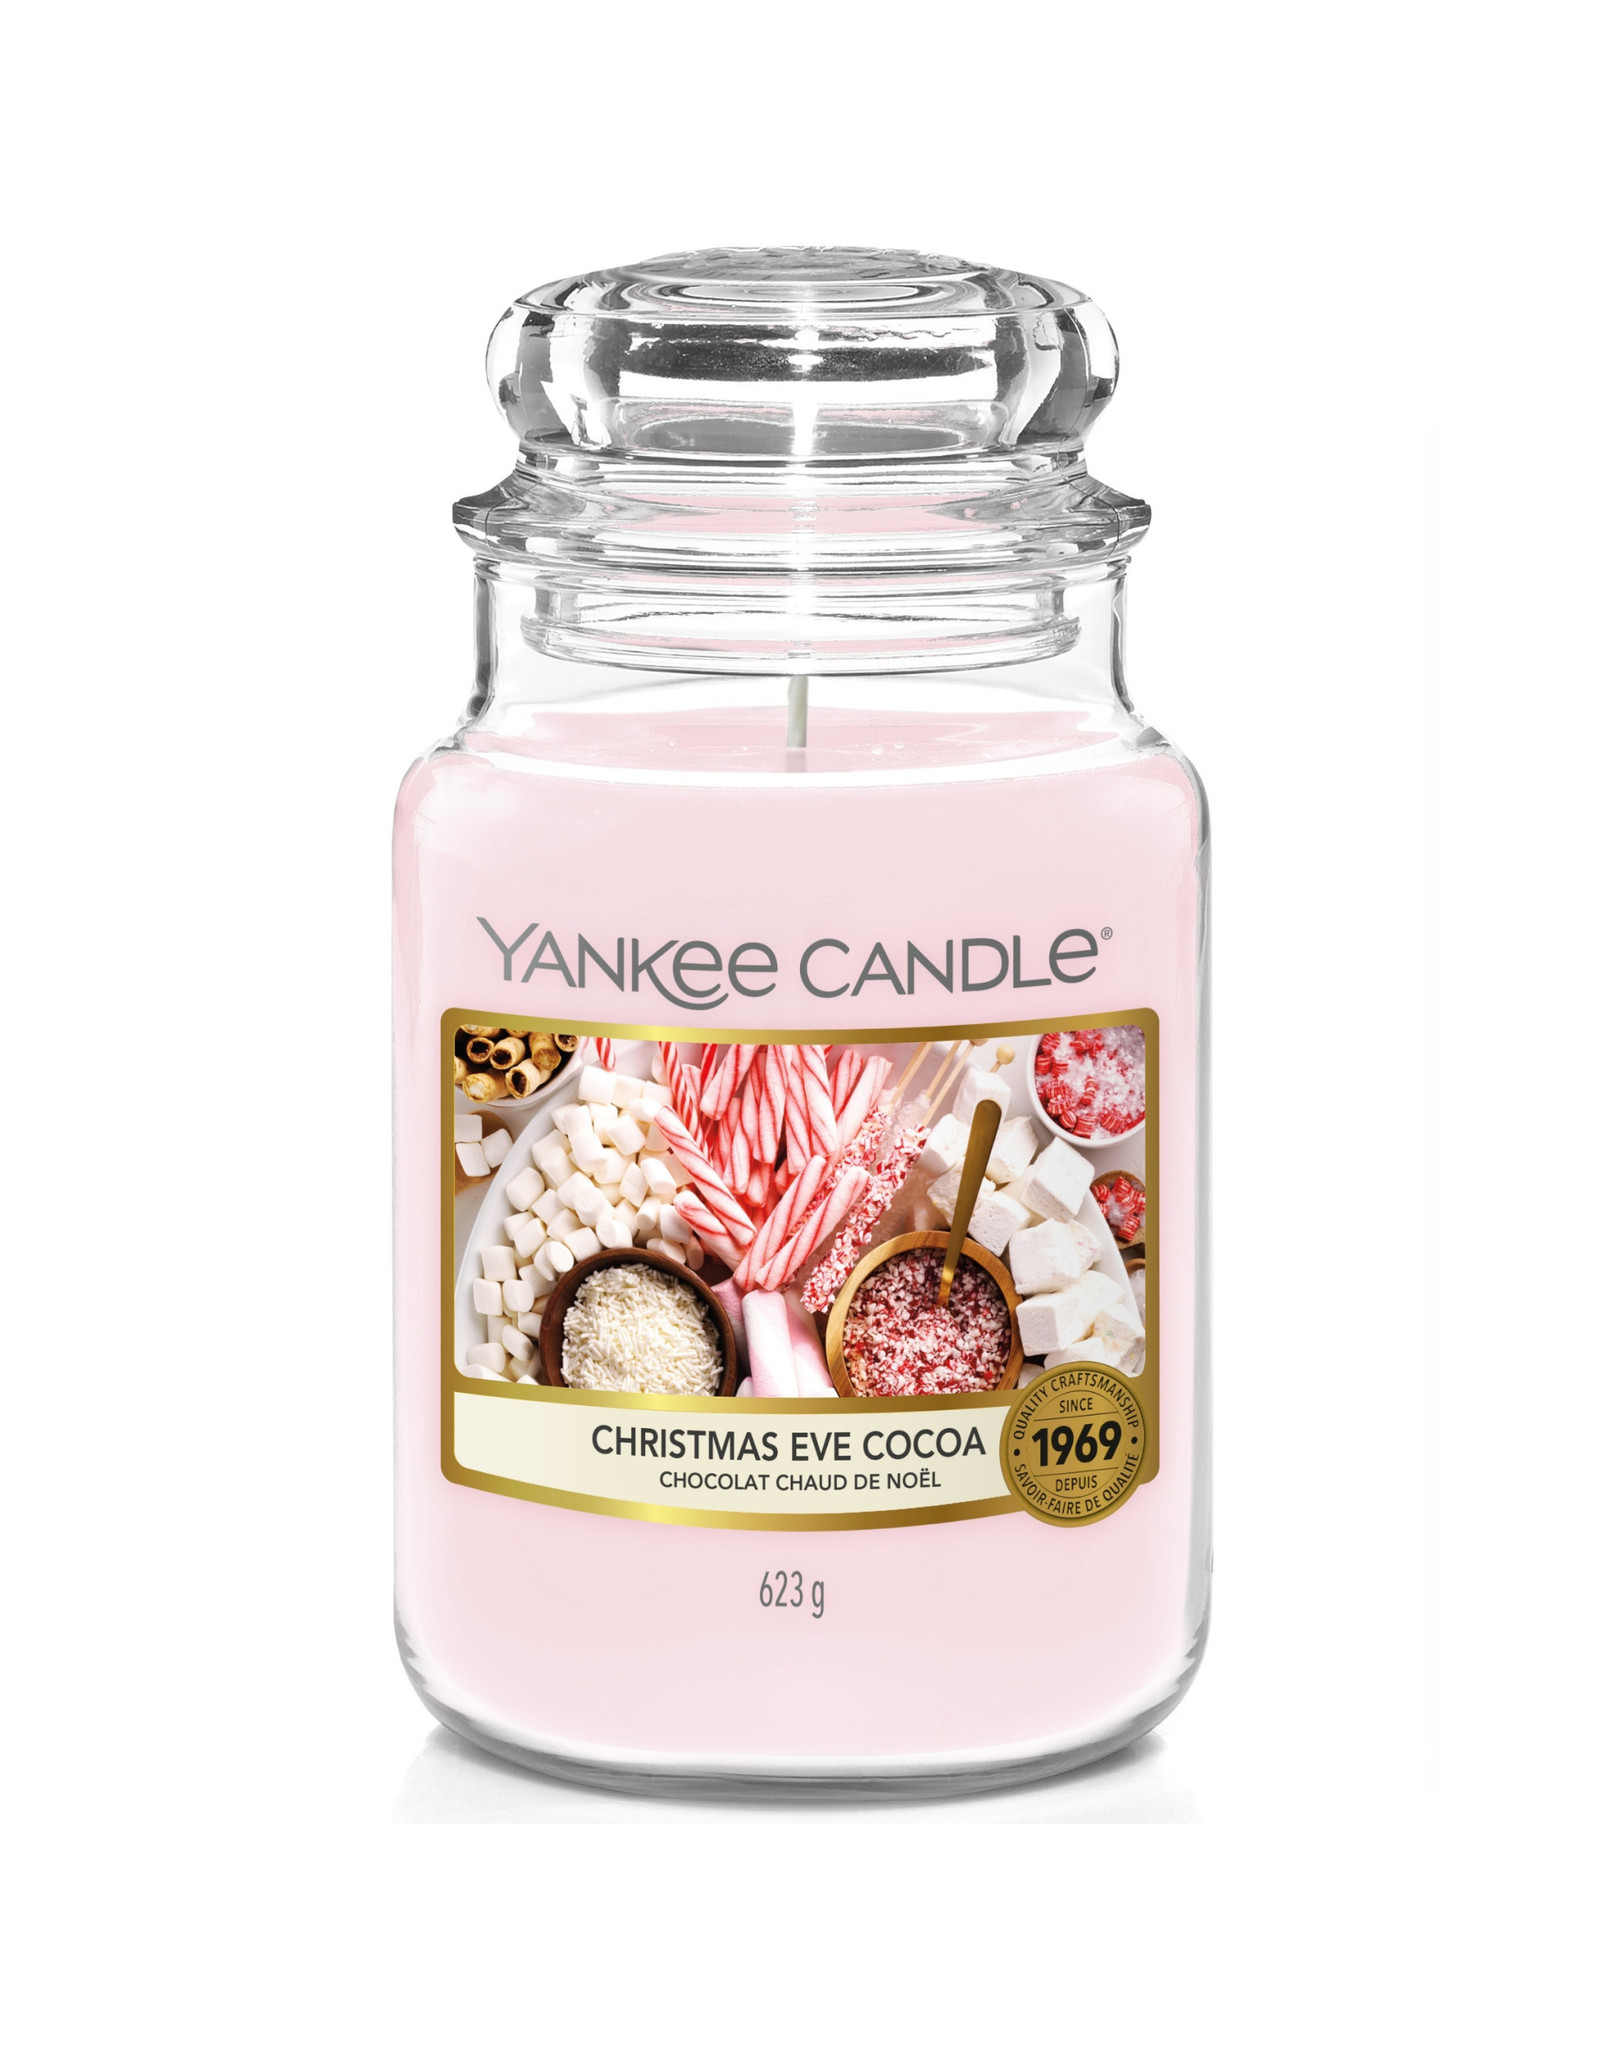 Yankee Candle Christmas Eve Cocoa - Large Jar